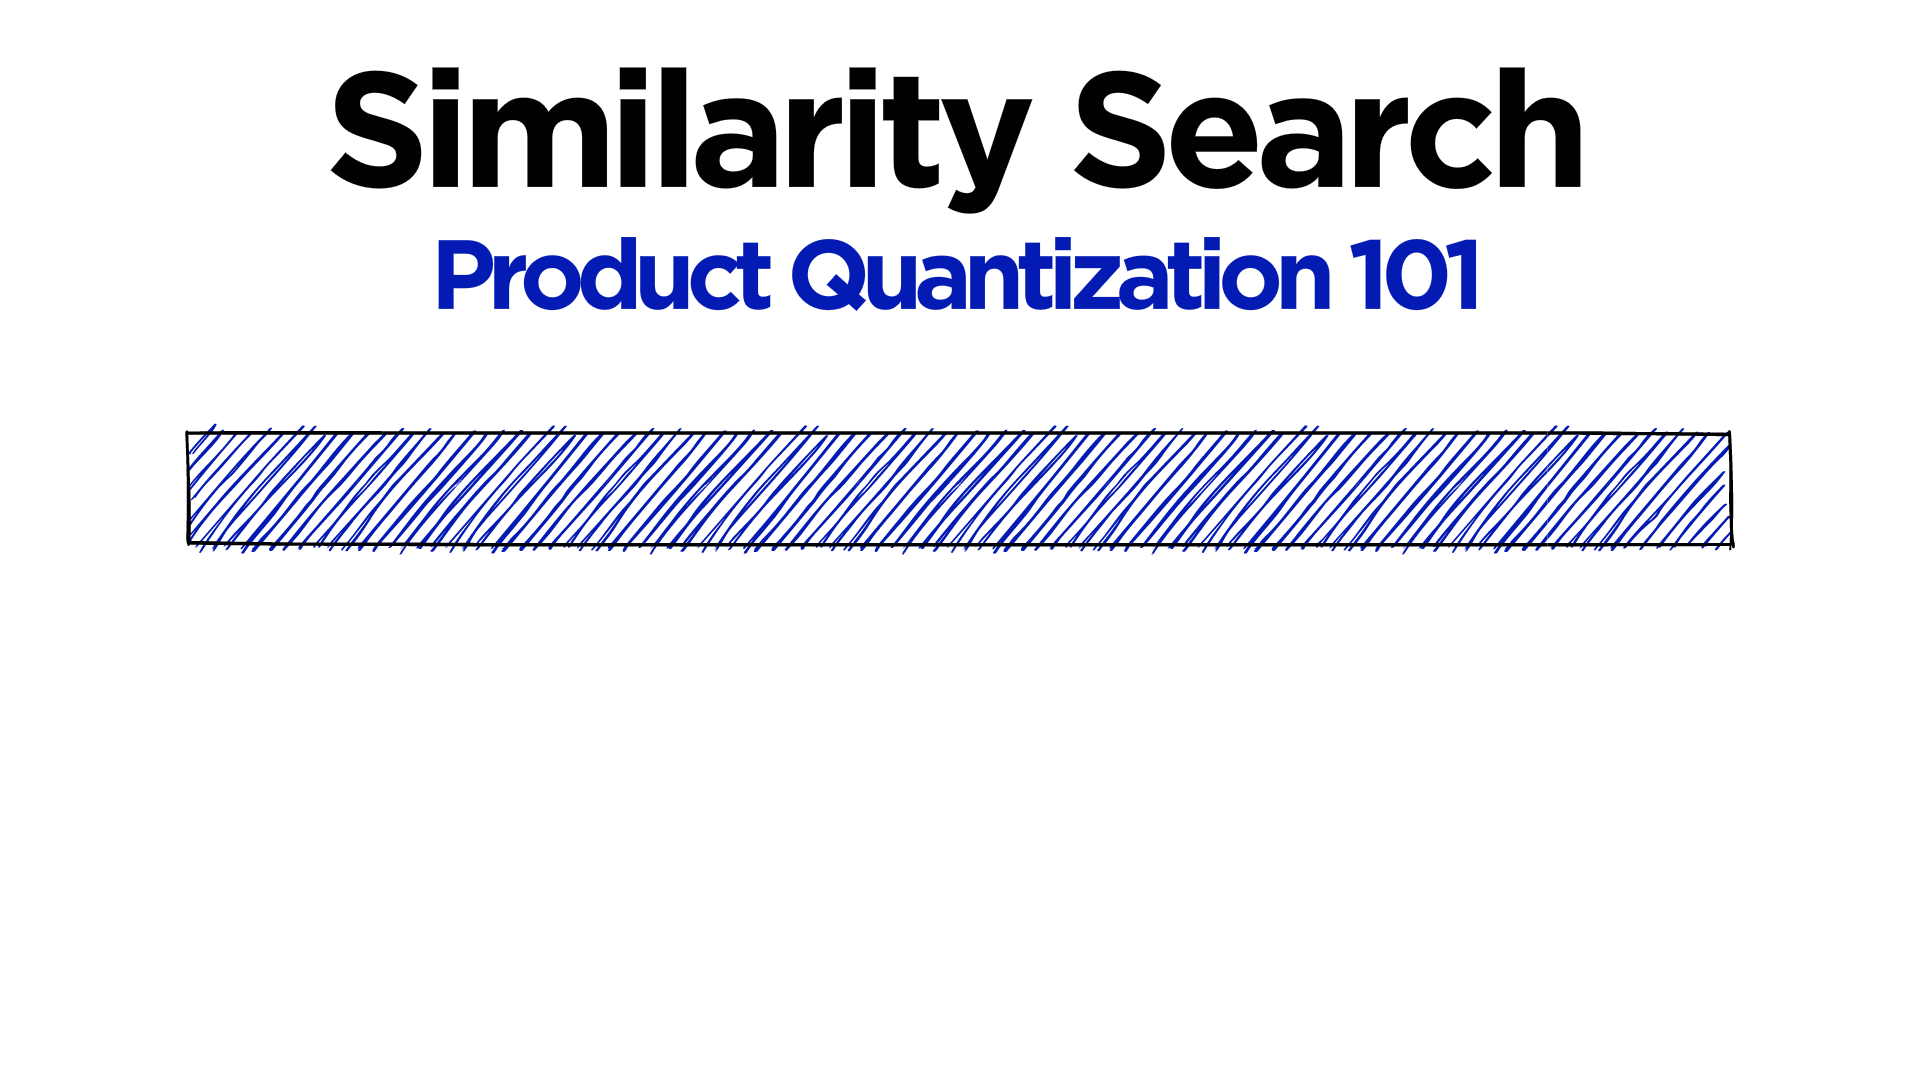 Product Quantization 101